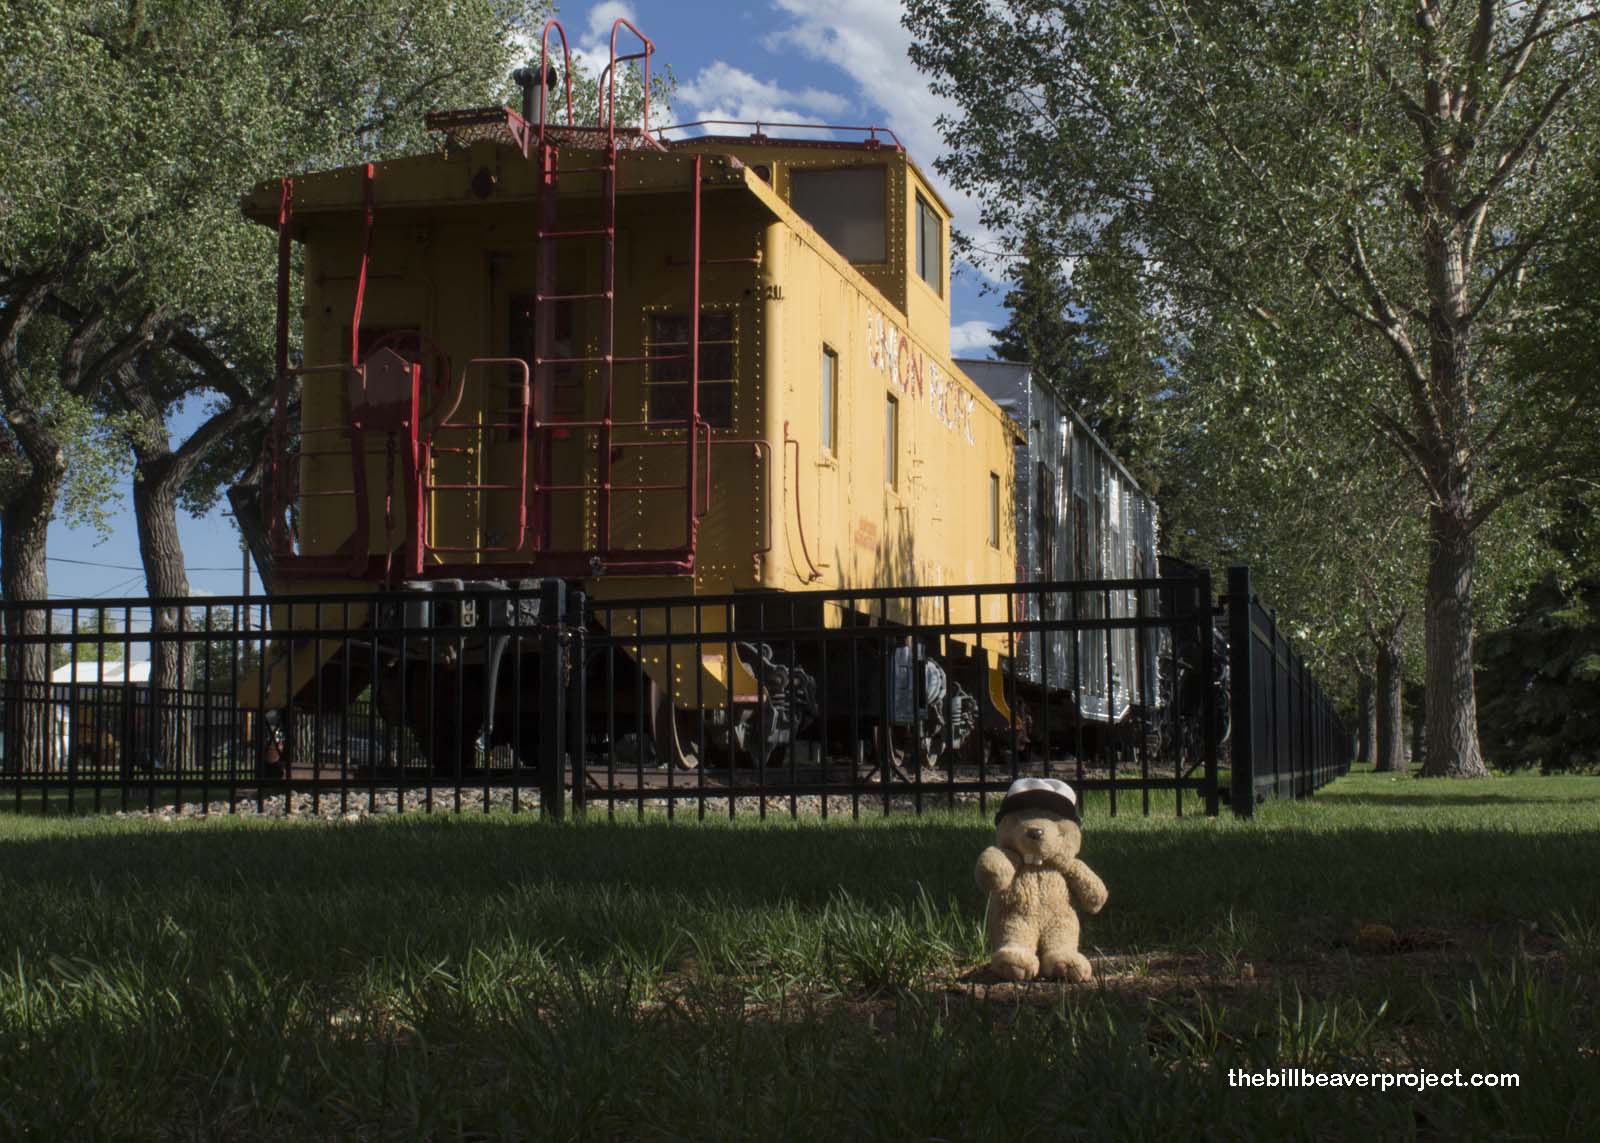 Laramie Historic Railroad Depot